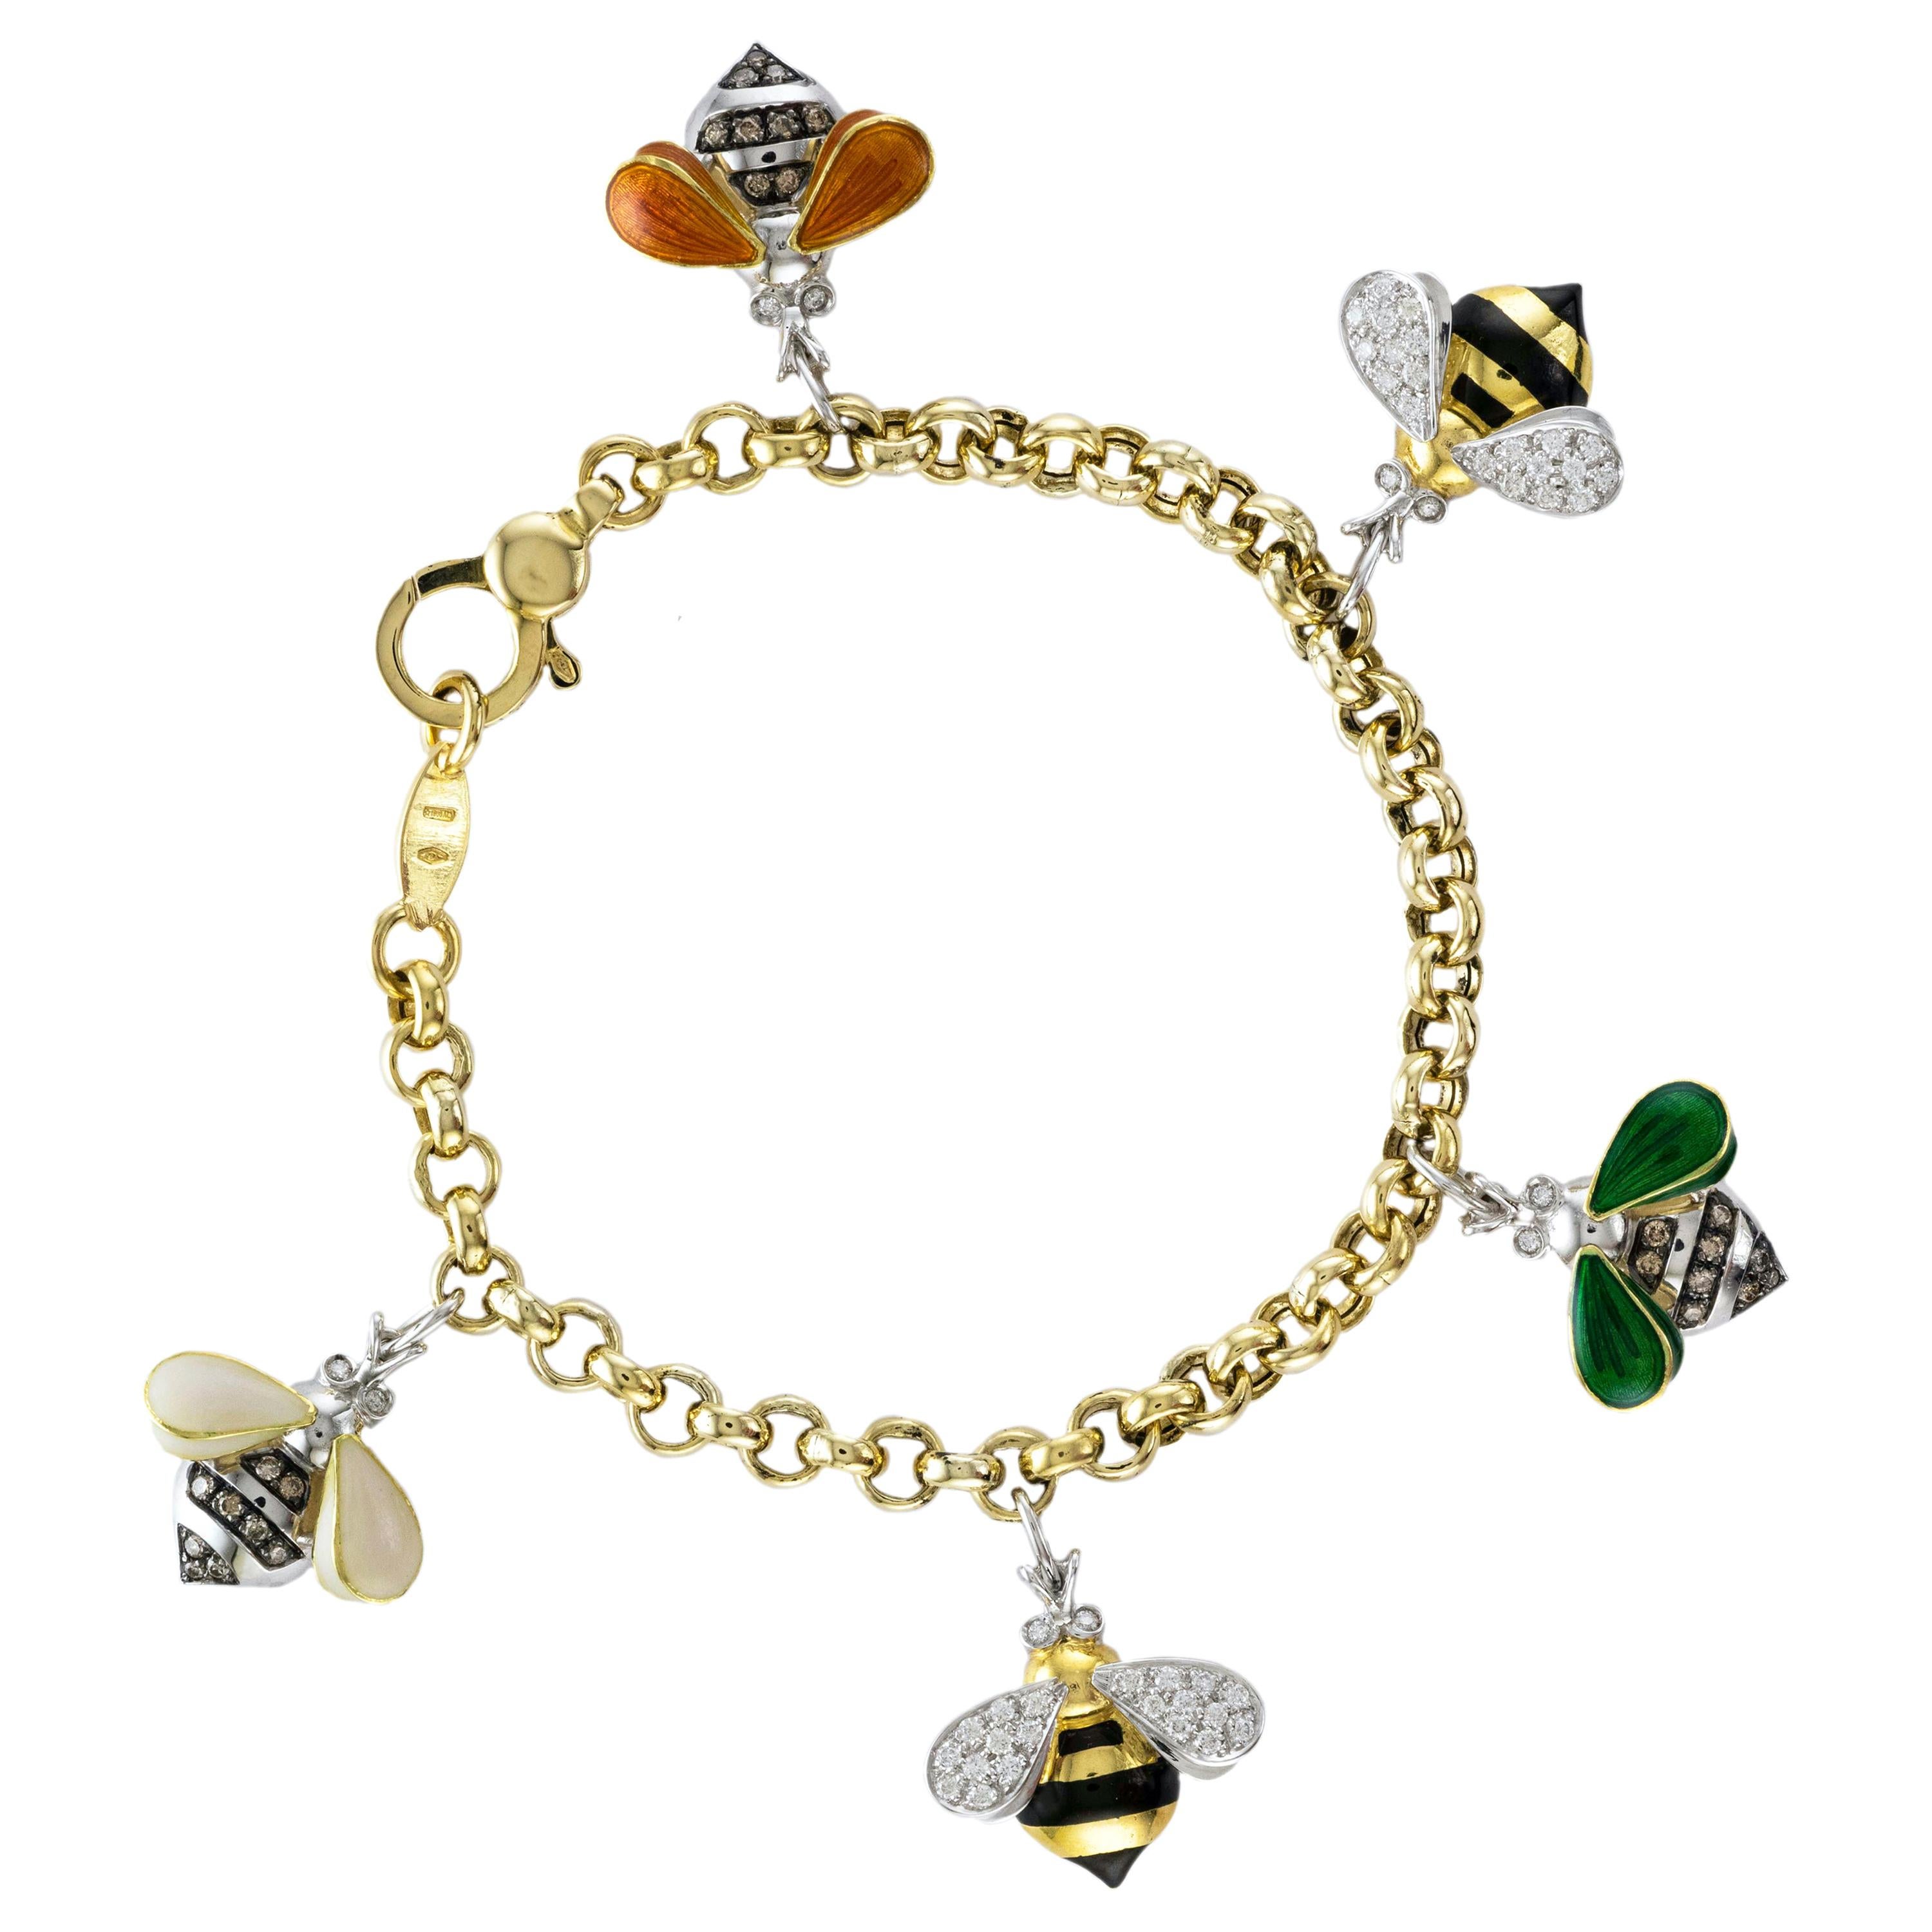 18 Karat Gold and Enameled Bees Charm Bracelet